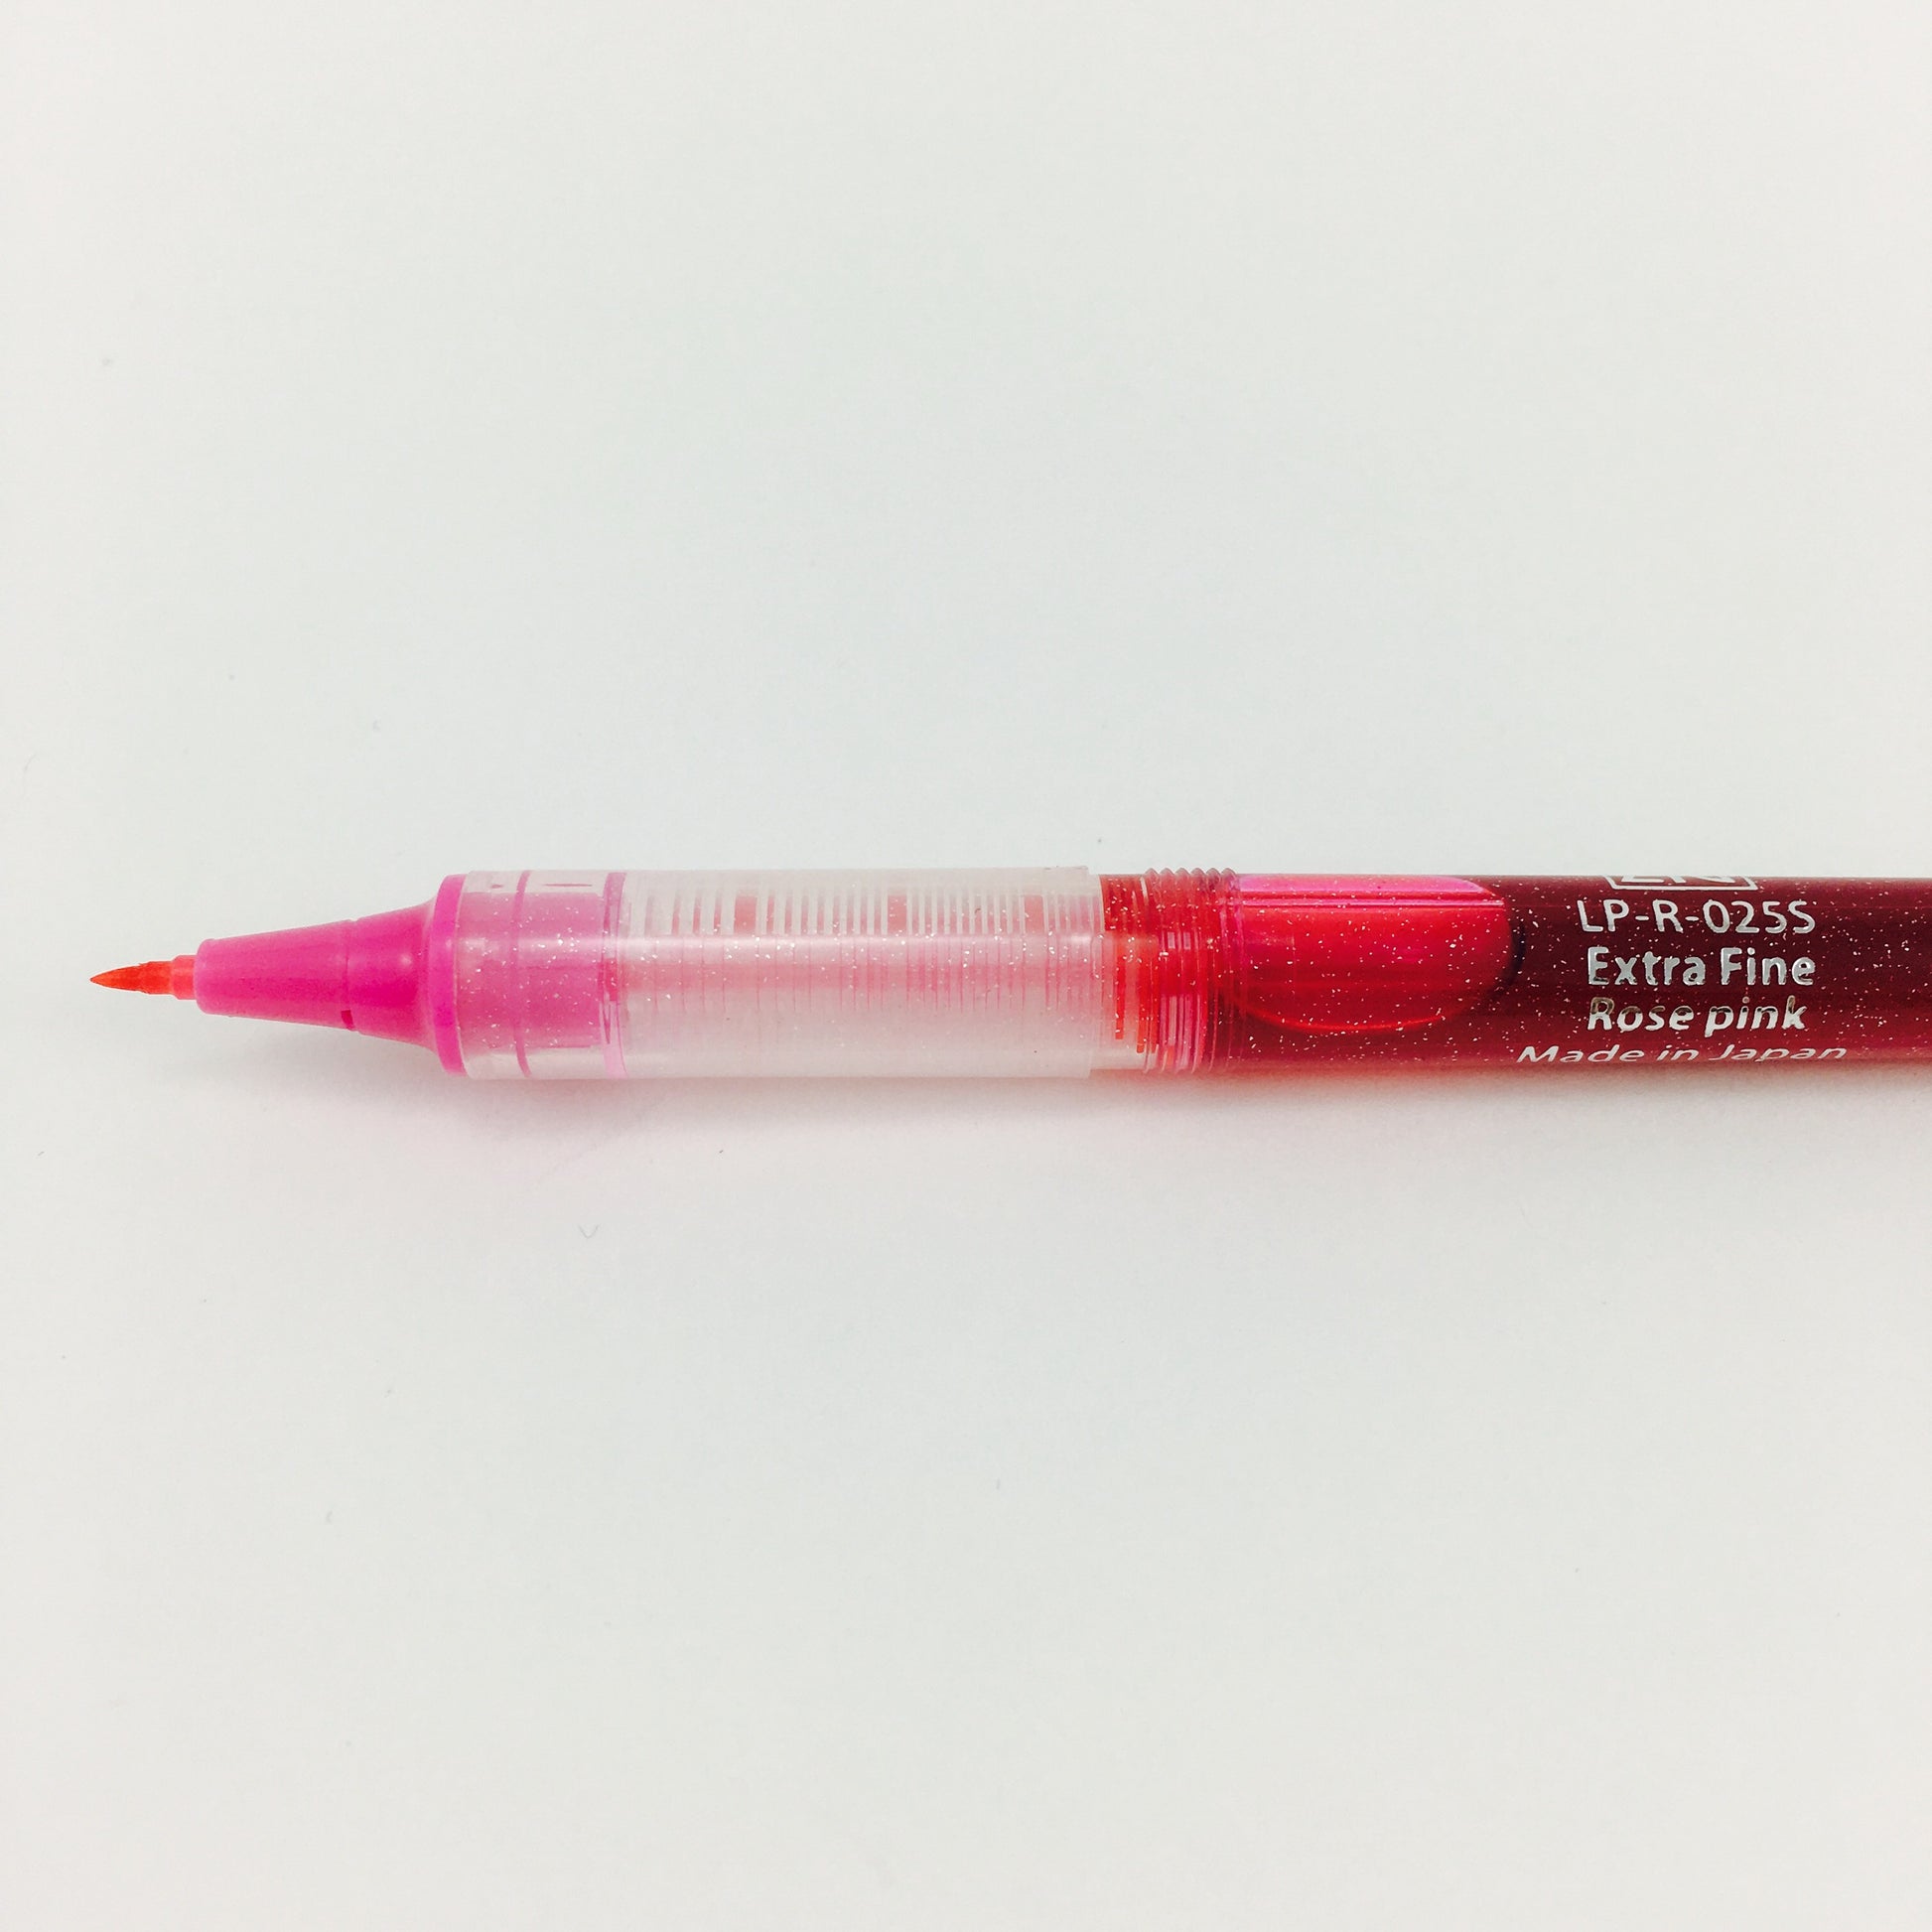 Zig by Kuretake "Cocoiro" Pen Cartridges Refills - Rose Pink / Extra Fine by Kuretake - K. A. Artist Shop